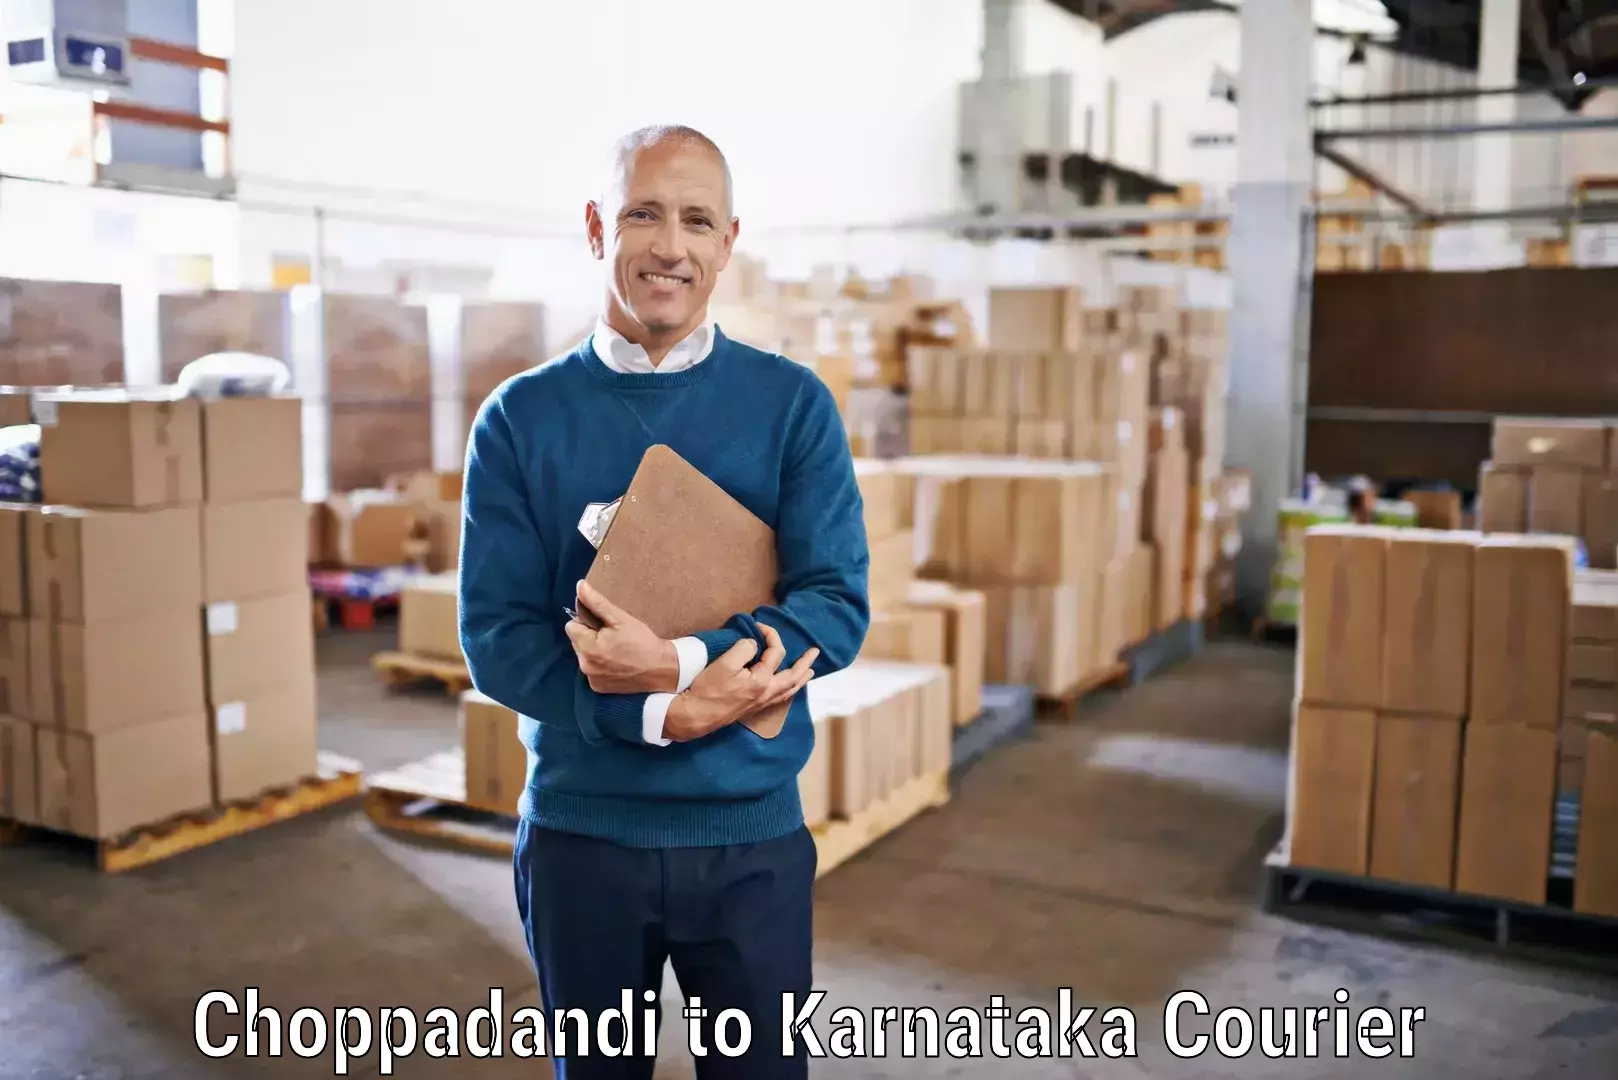 Courier service comparison in Choppadandi to Ramanathapura